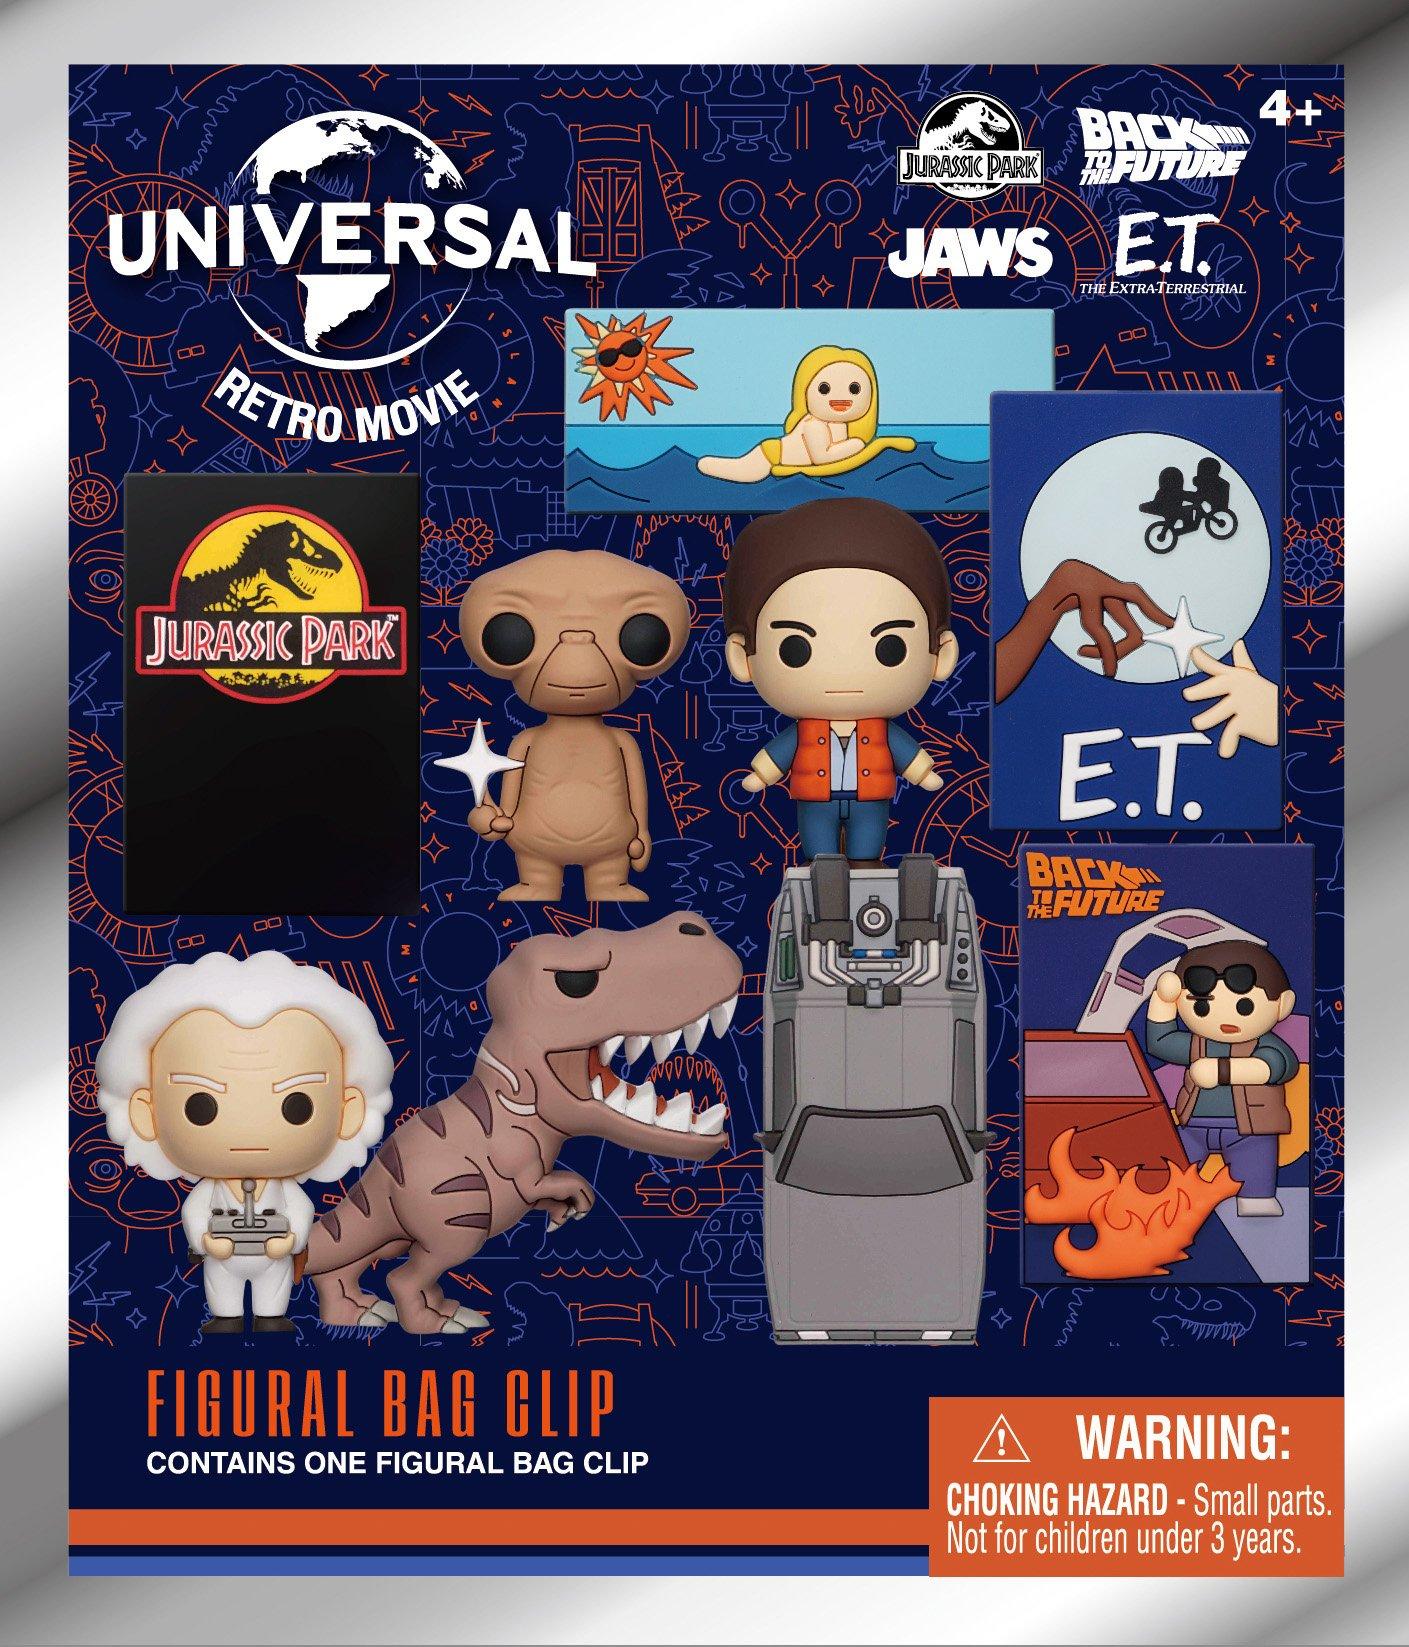 https://media.gamestop.com/i/gamestop/11167207/Universal-Retro-Movies-E.T.-the-Extra-Terrestrial-Back-to-the-Future-Jaws-Jurassic-Park-3D-Foam-Bag-Clip-Blind-Bag